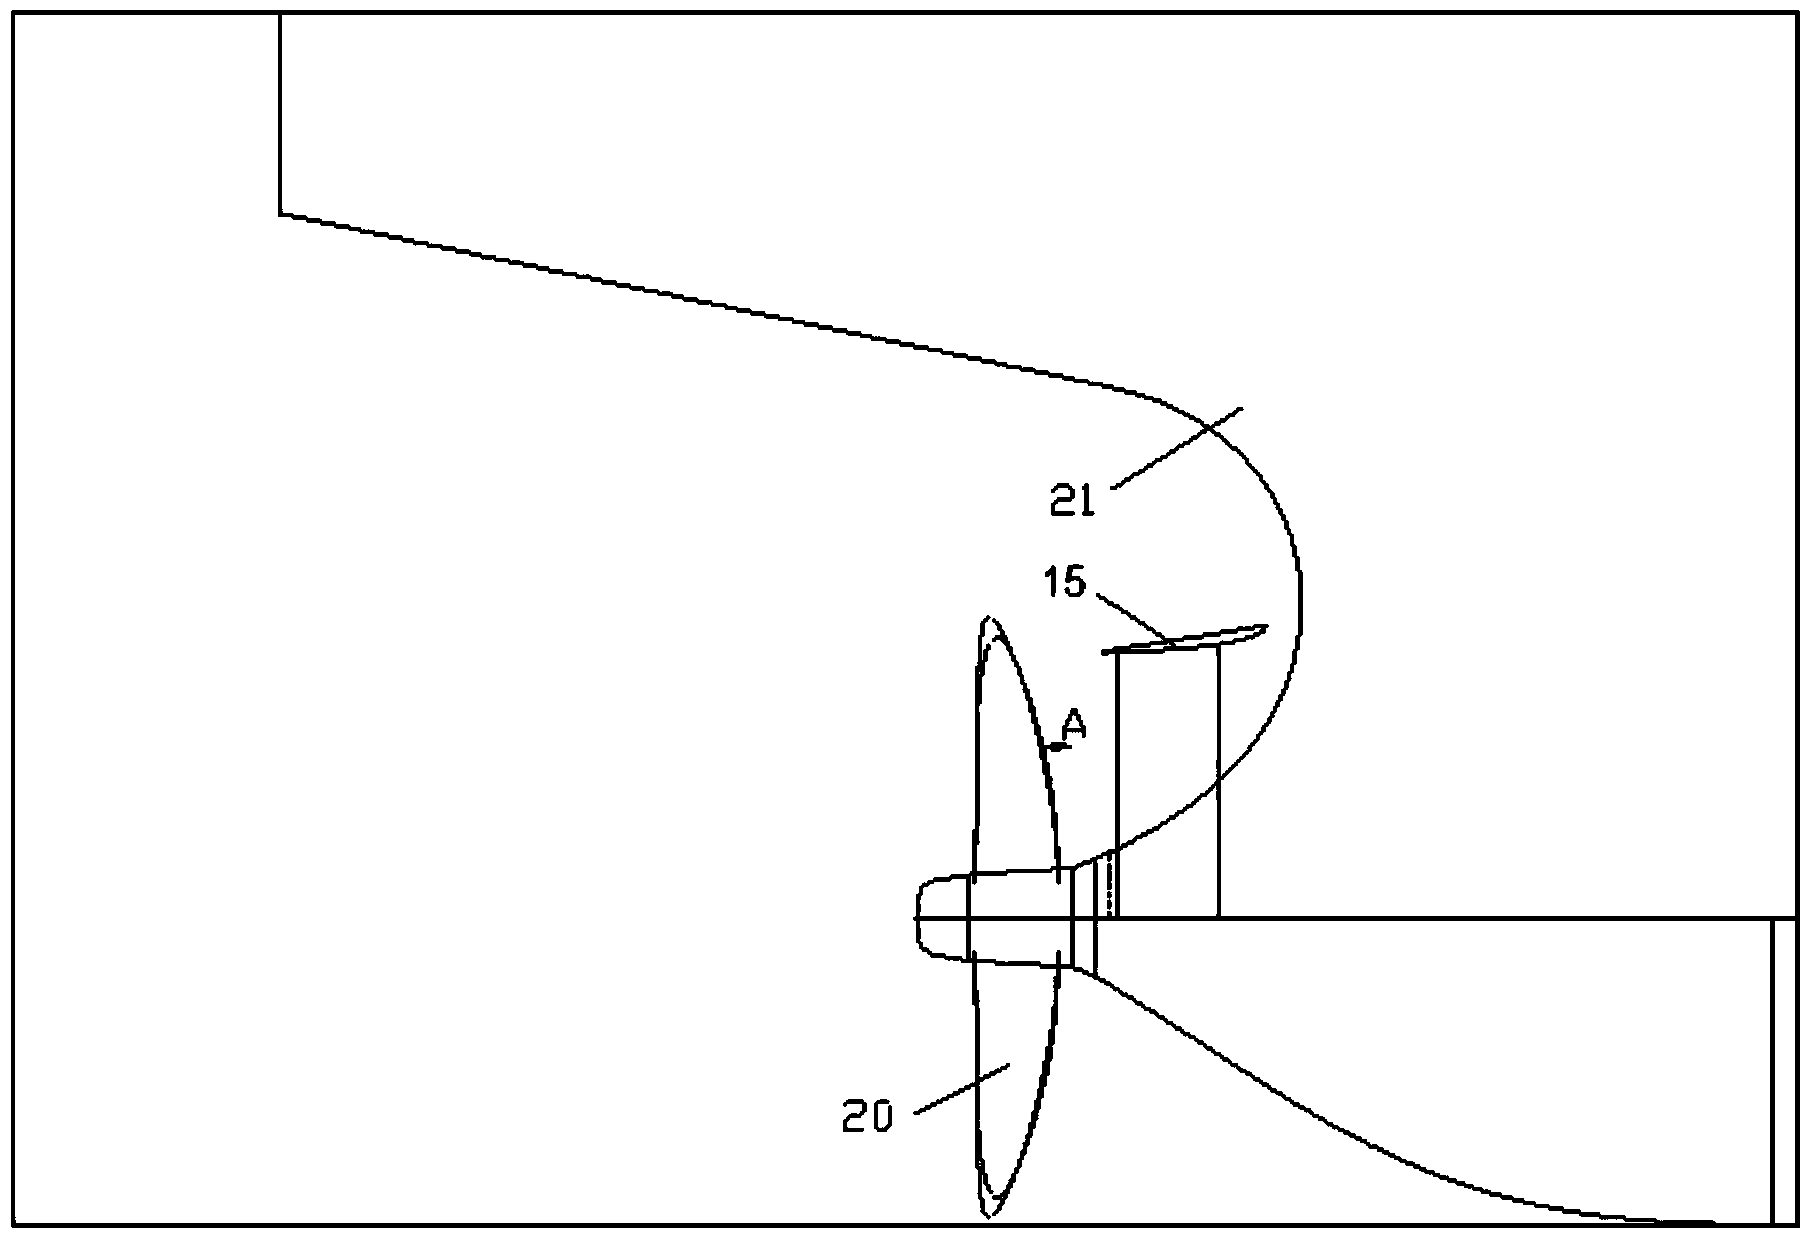 Prerotation fan-shaped conduit for right-handed single-screw ship